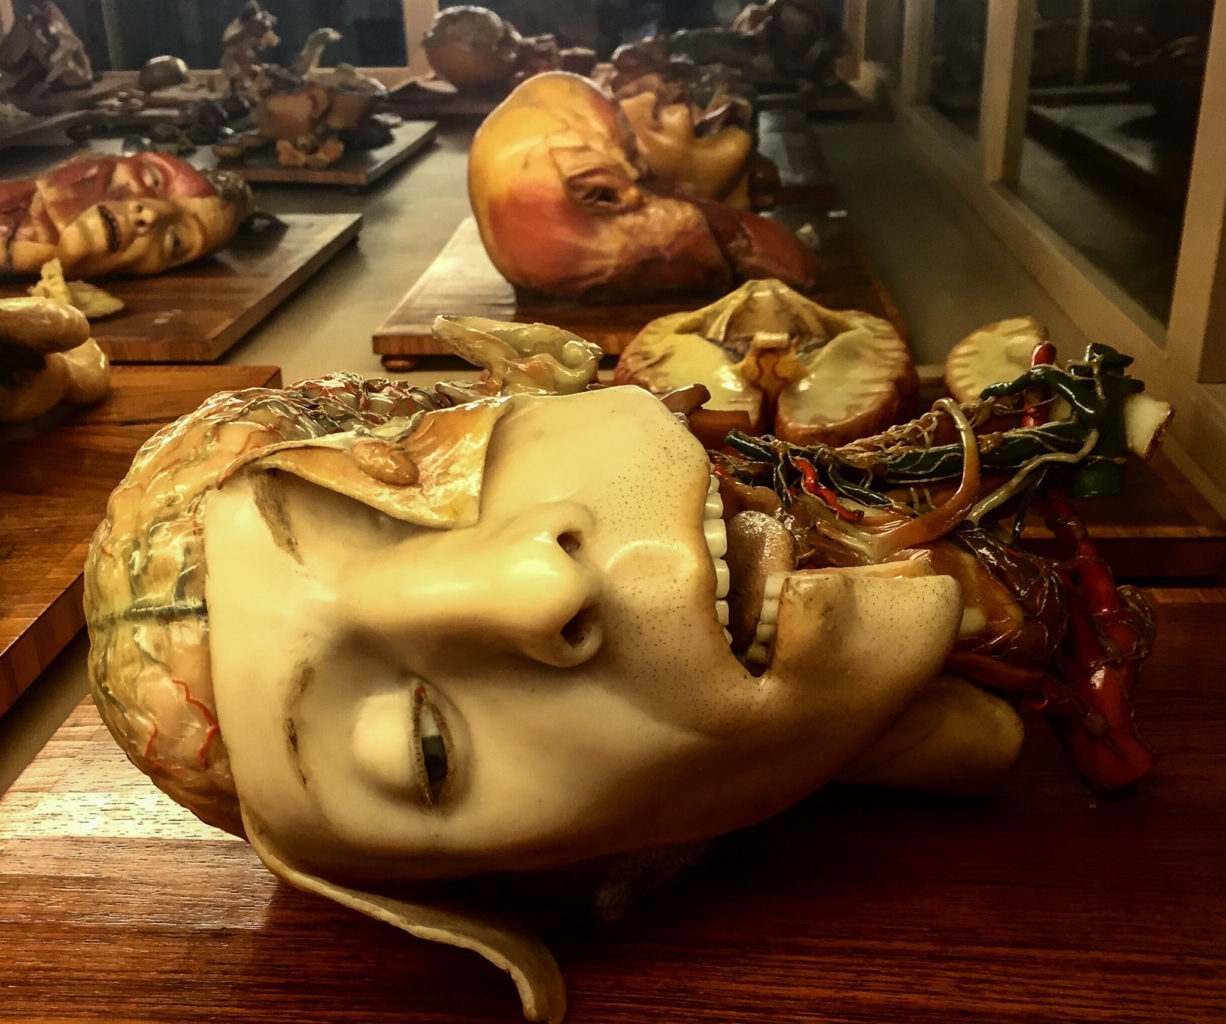 Анатомический музей восковых фигур Луиджи Каттанео (Museo delle Cere anatomiche «Luigi Cattaneo»)